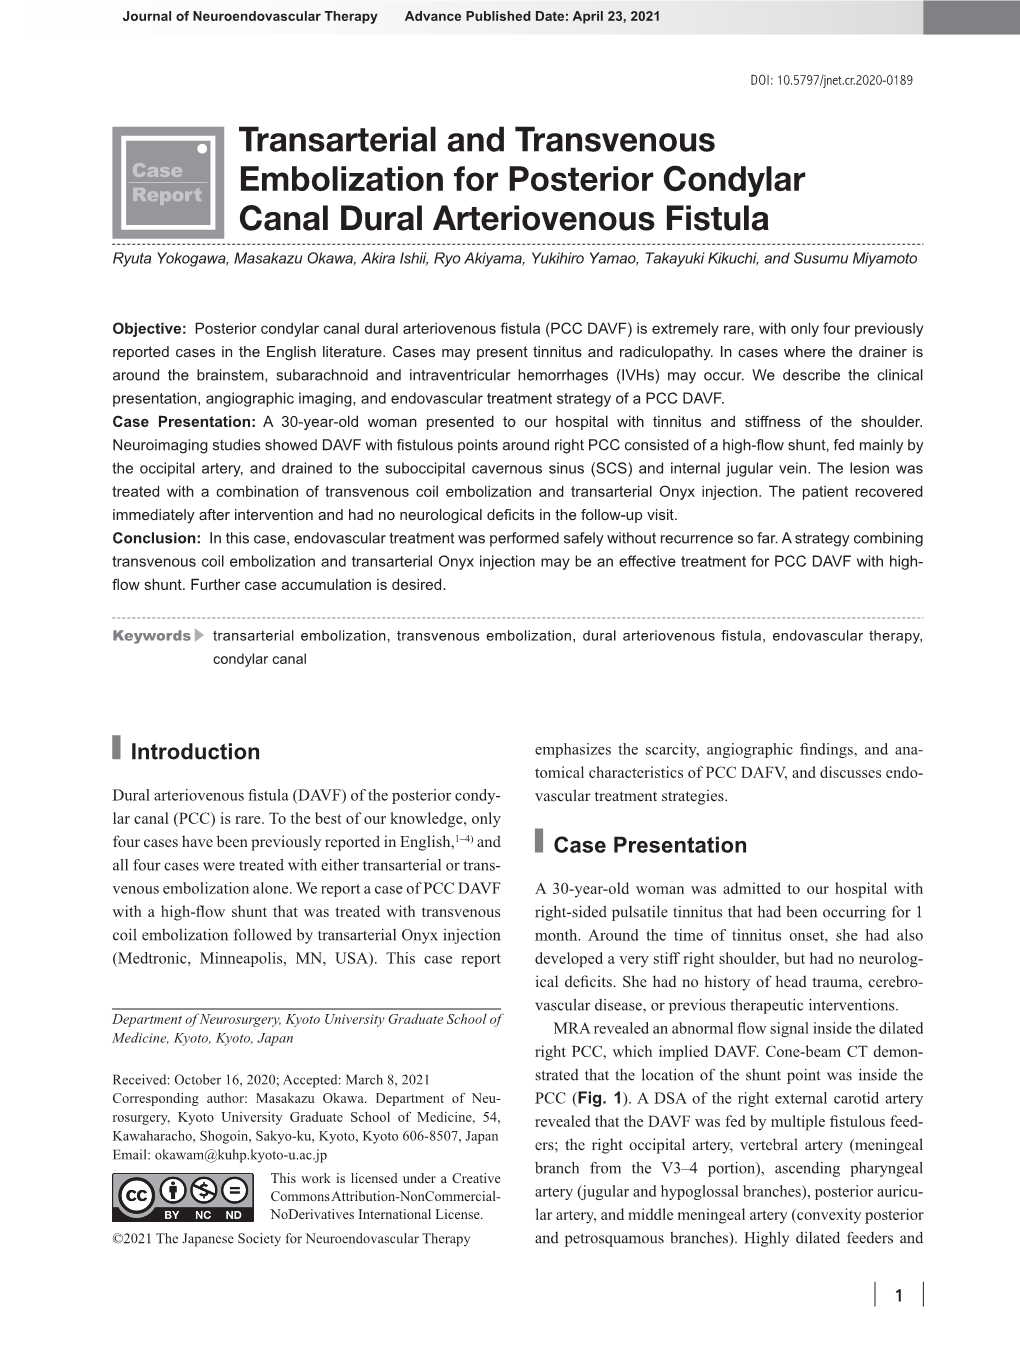 Transarterial and Transvenous Embolization for Posterior Condylar